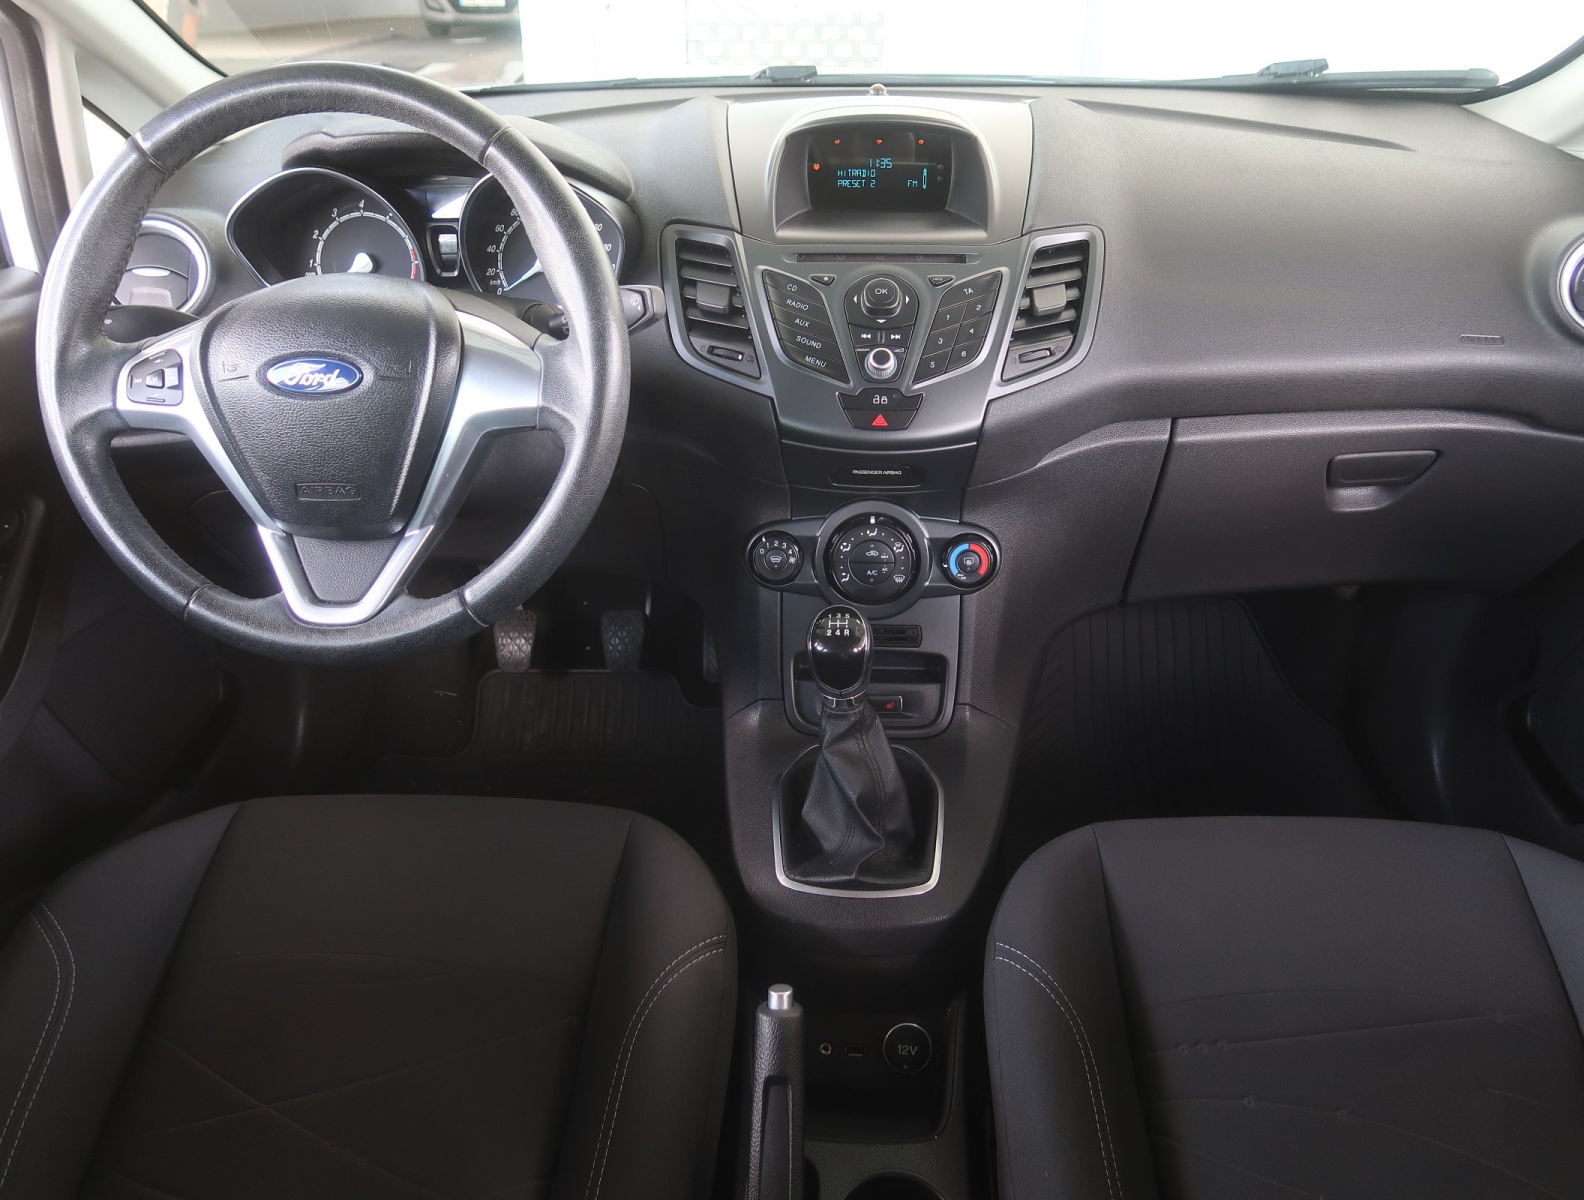 Ford Fiesta, 2013, 1.25 i, 60kW